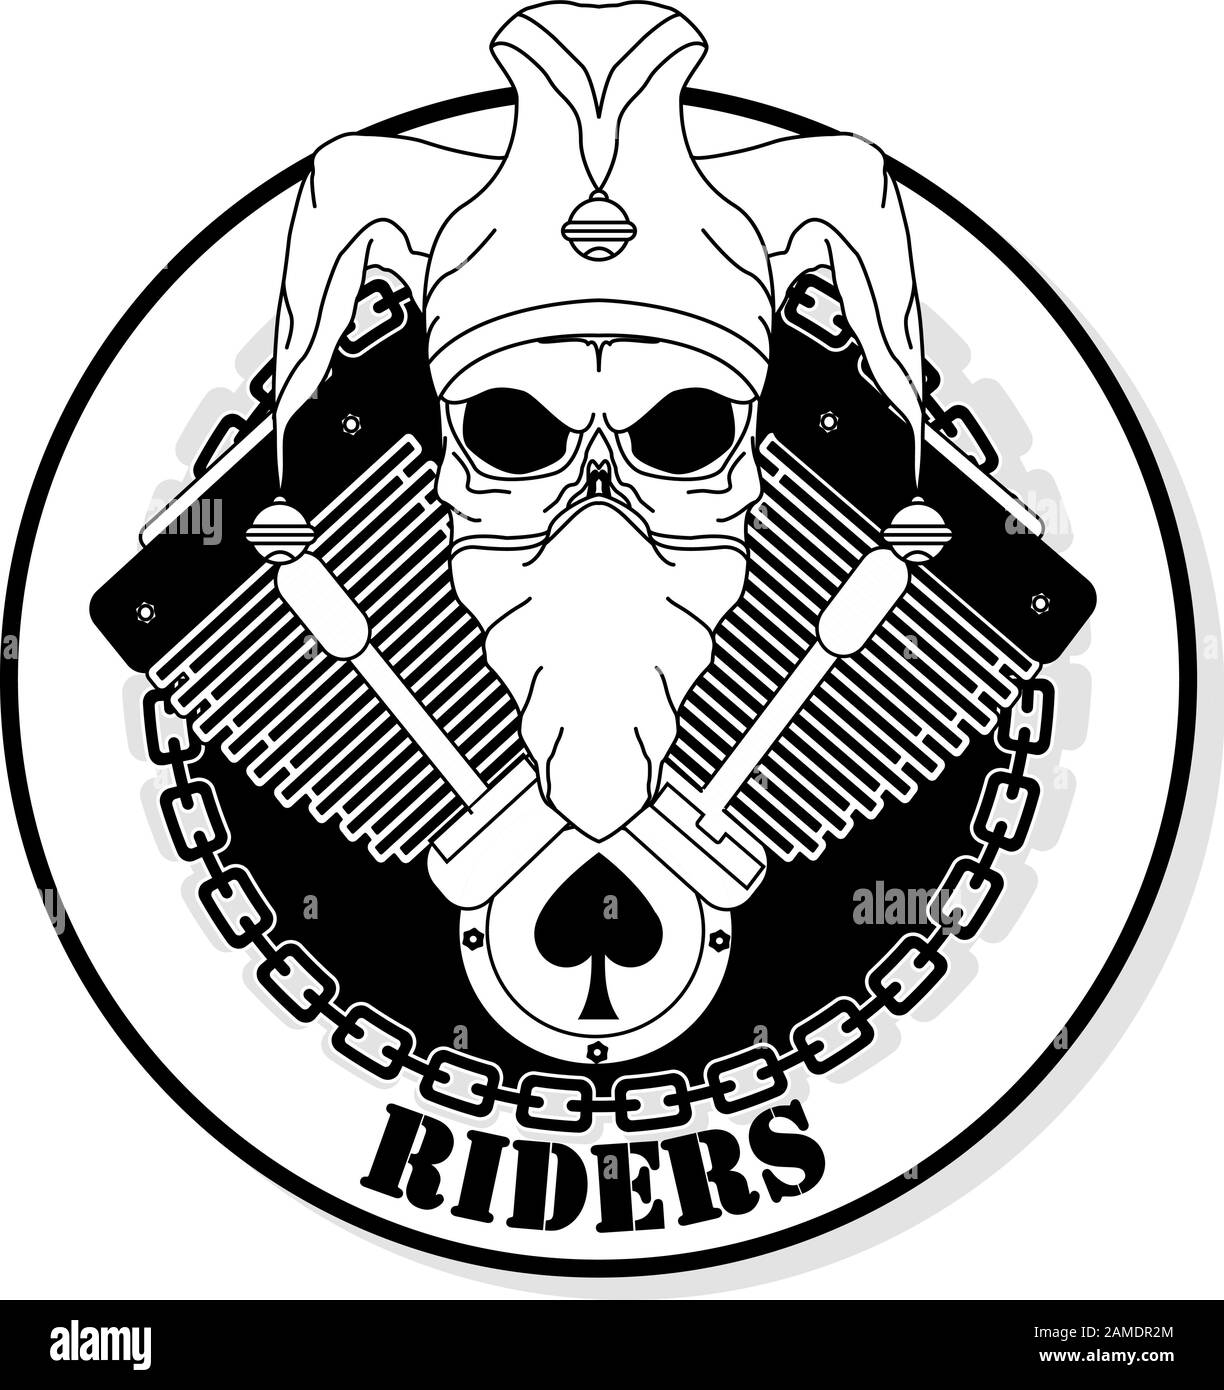 Motorbike club emblem. Pilot / rider badge vector set . Isolated illustration on white background.. Stock Vector